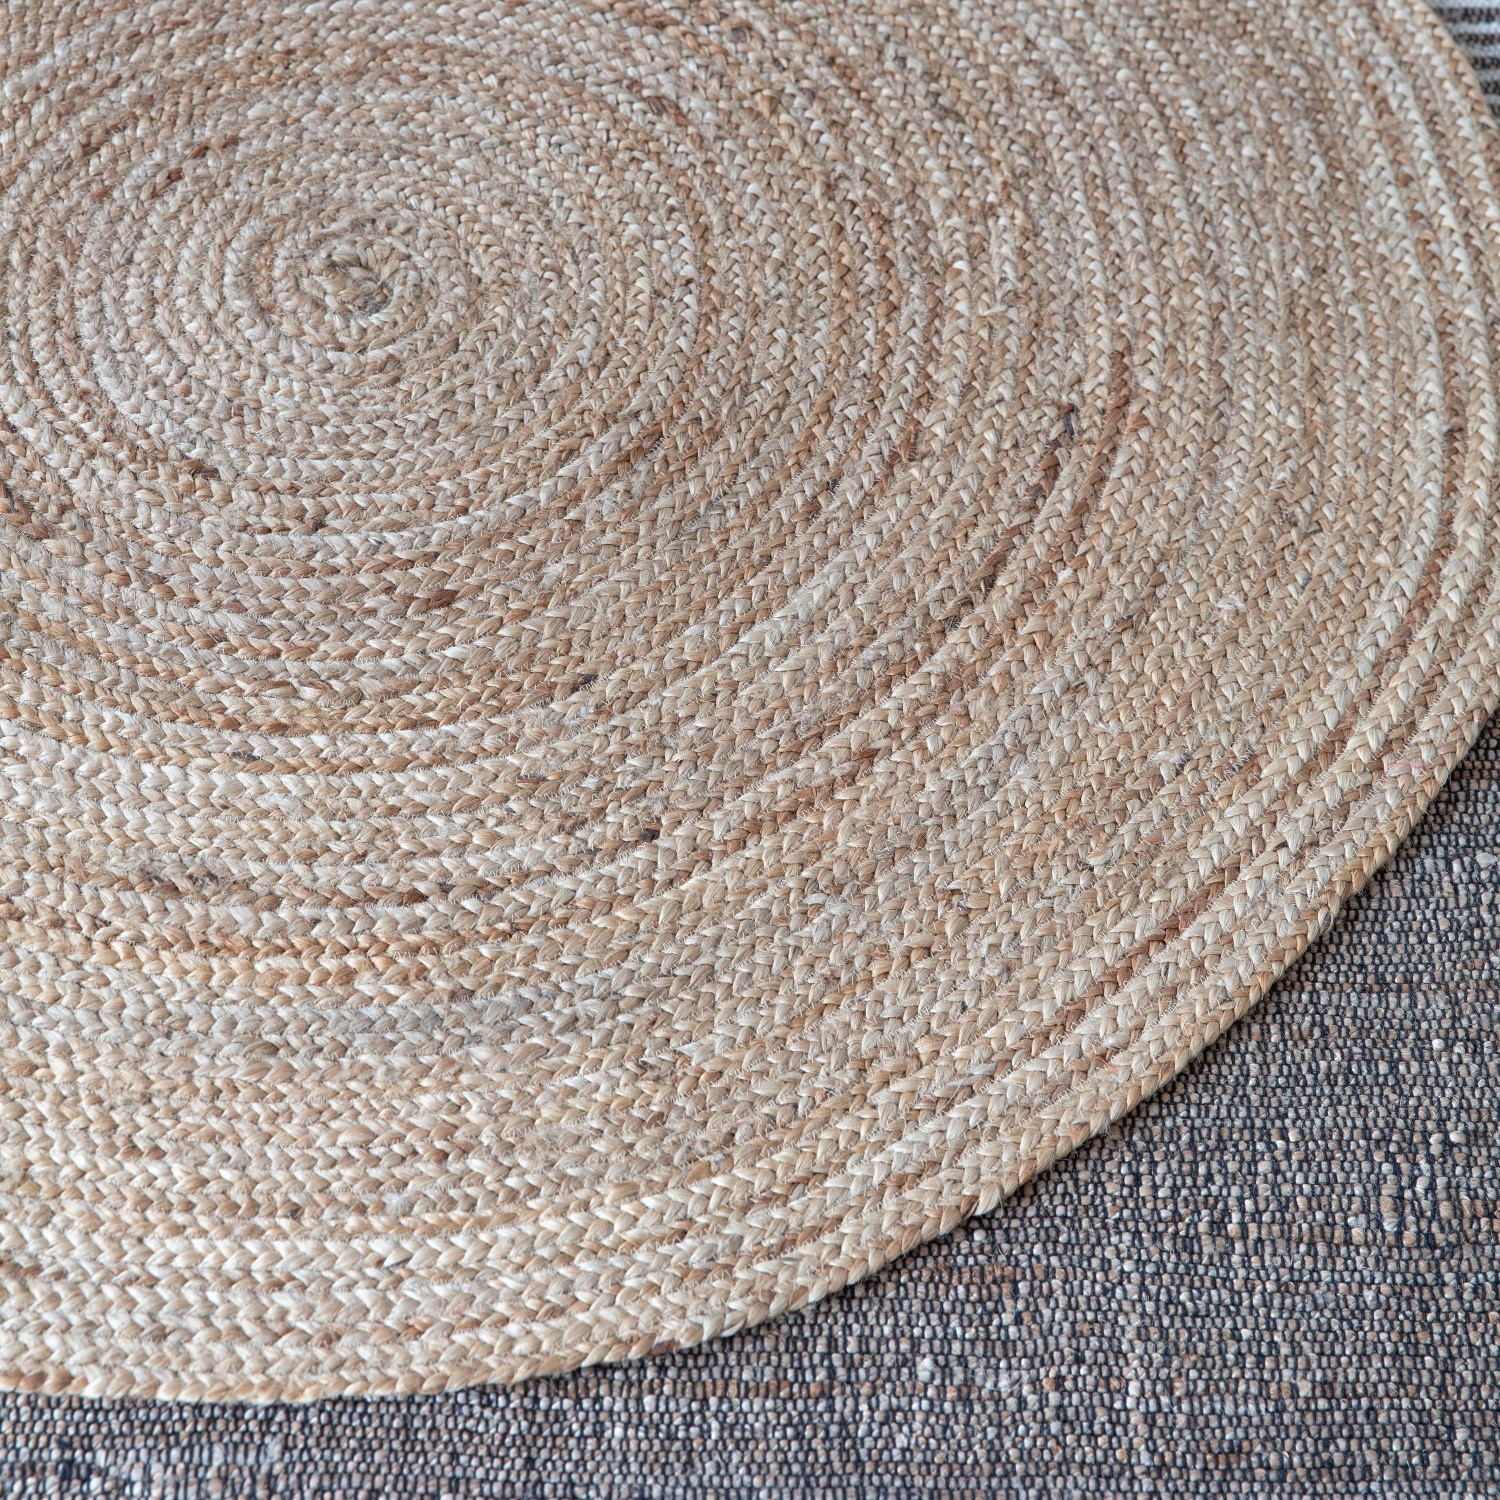 Round Jute Natural Tessellate Rug– Floorsome